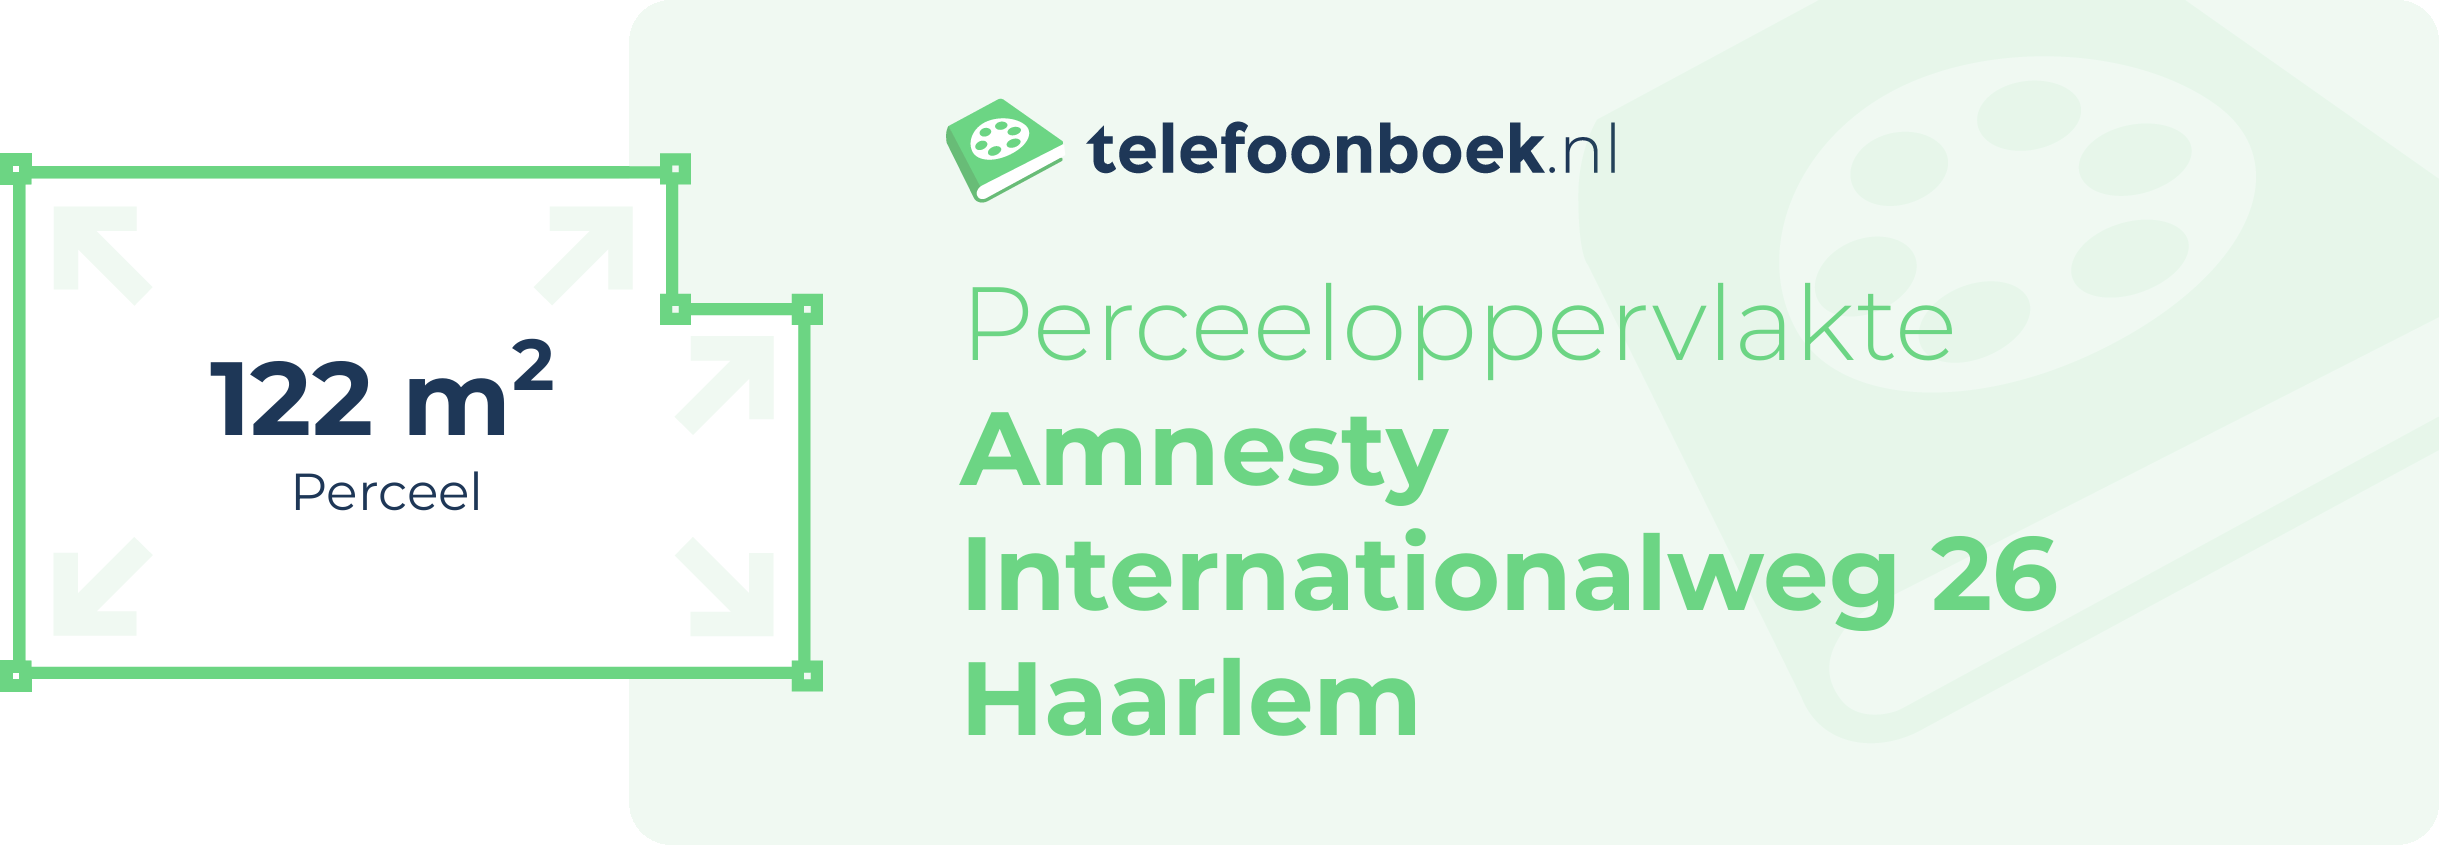 Perceeloppervlakte Amnesty Internationalweg 26 Haarlem